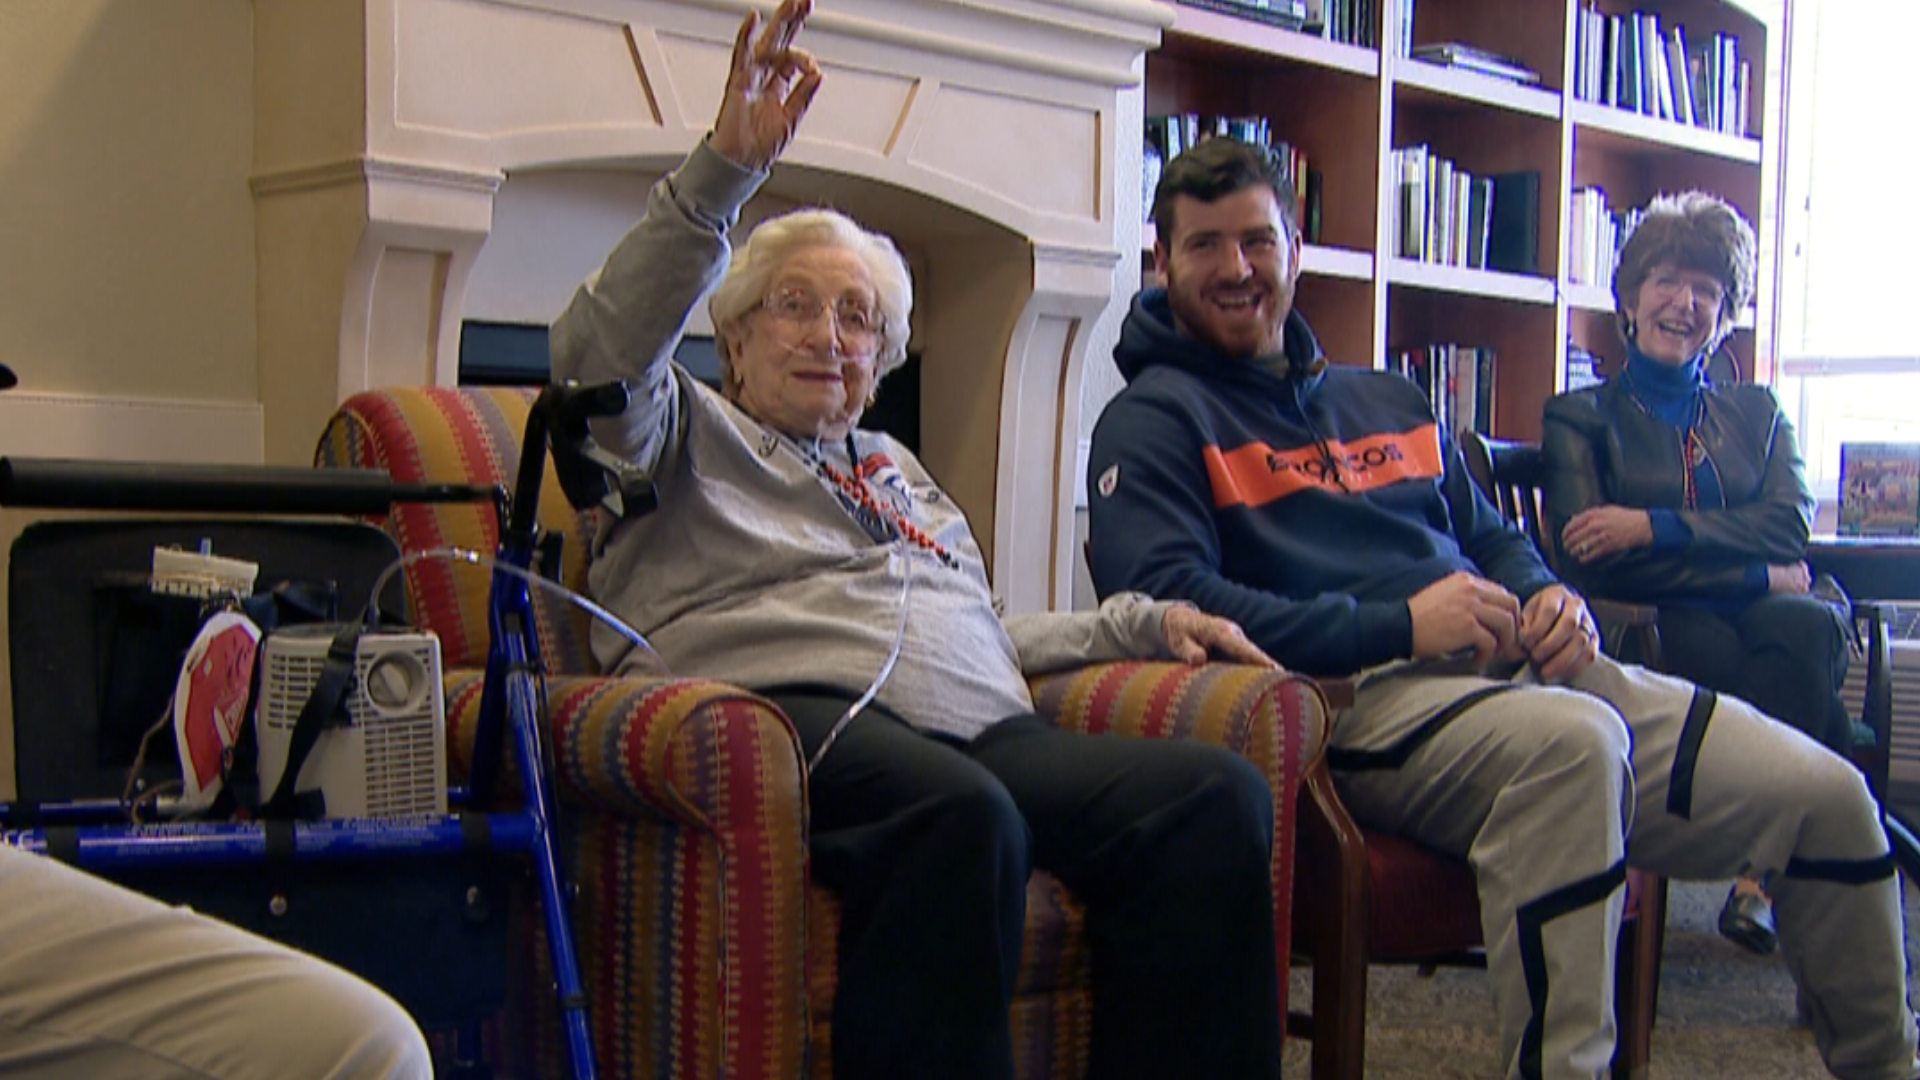 The Broncos linebacker met his biggest fan, 90-year-old Margaret Cramer, at Lincoln Meadows Senior Living.